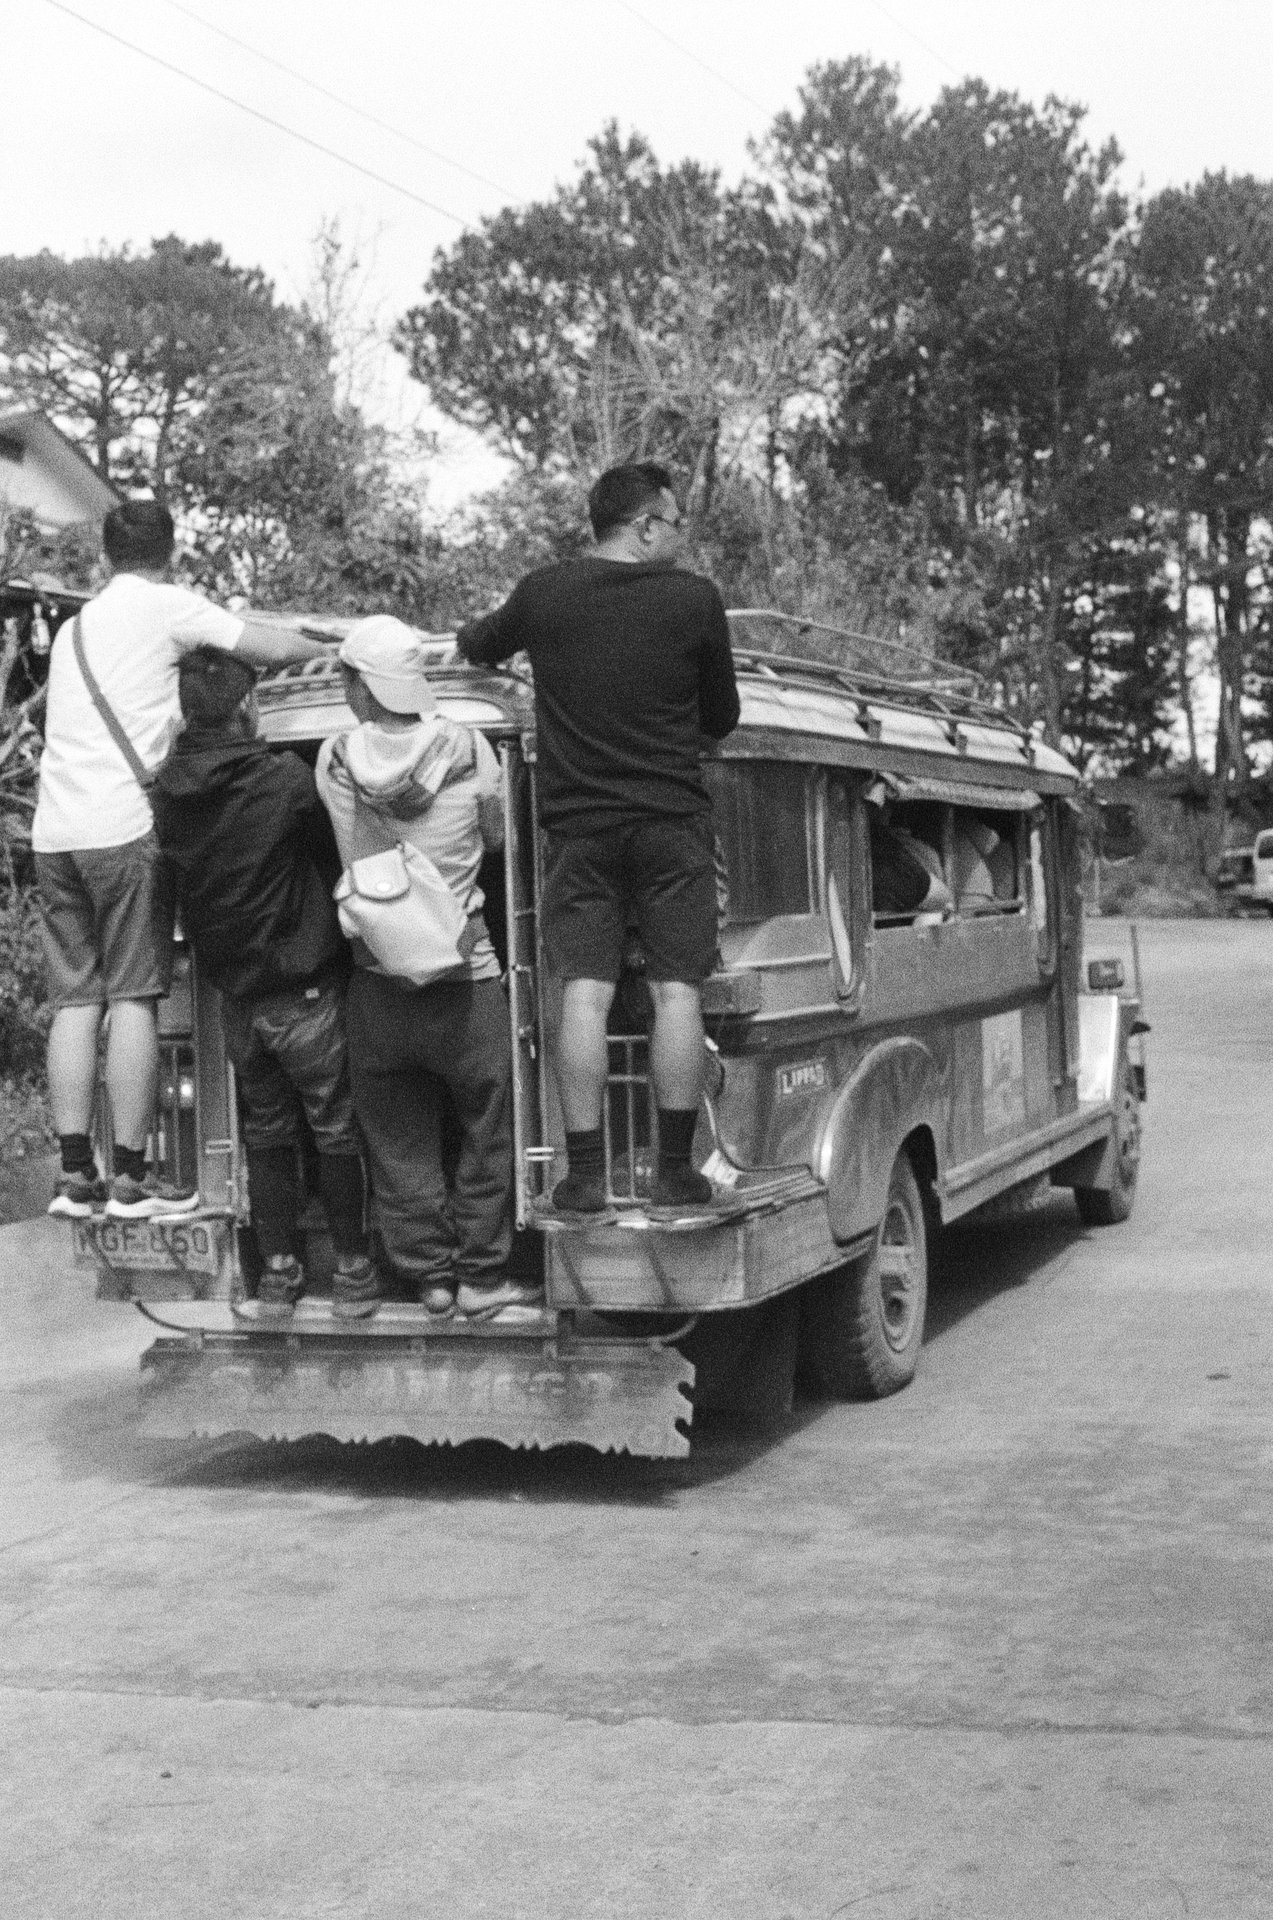 Jeepney, Jeepney!